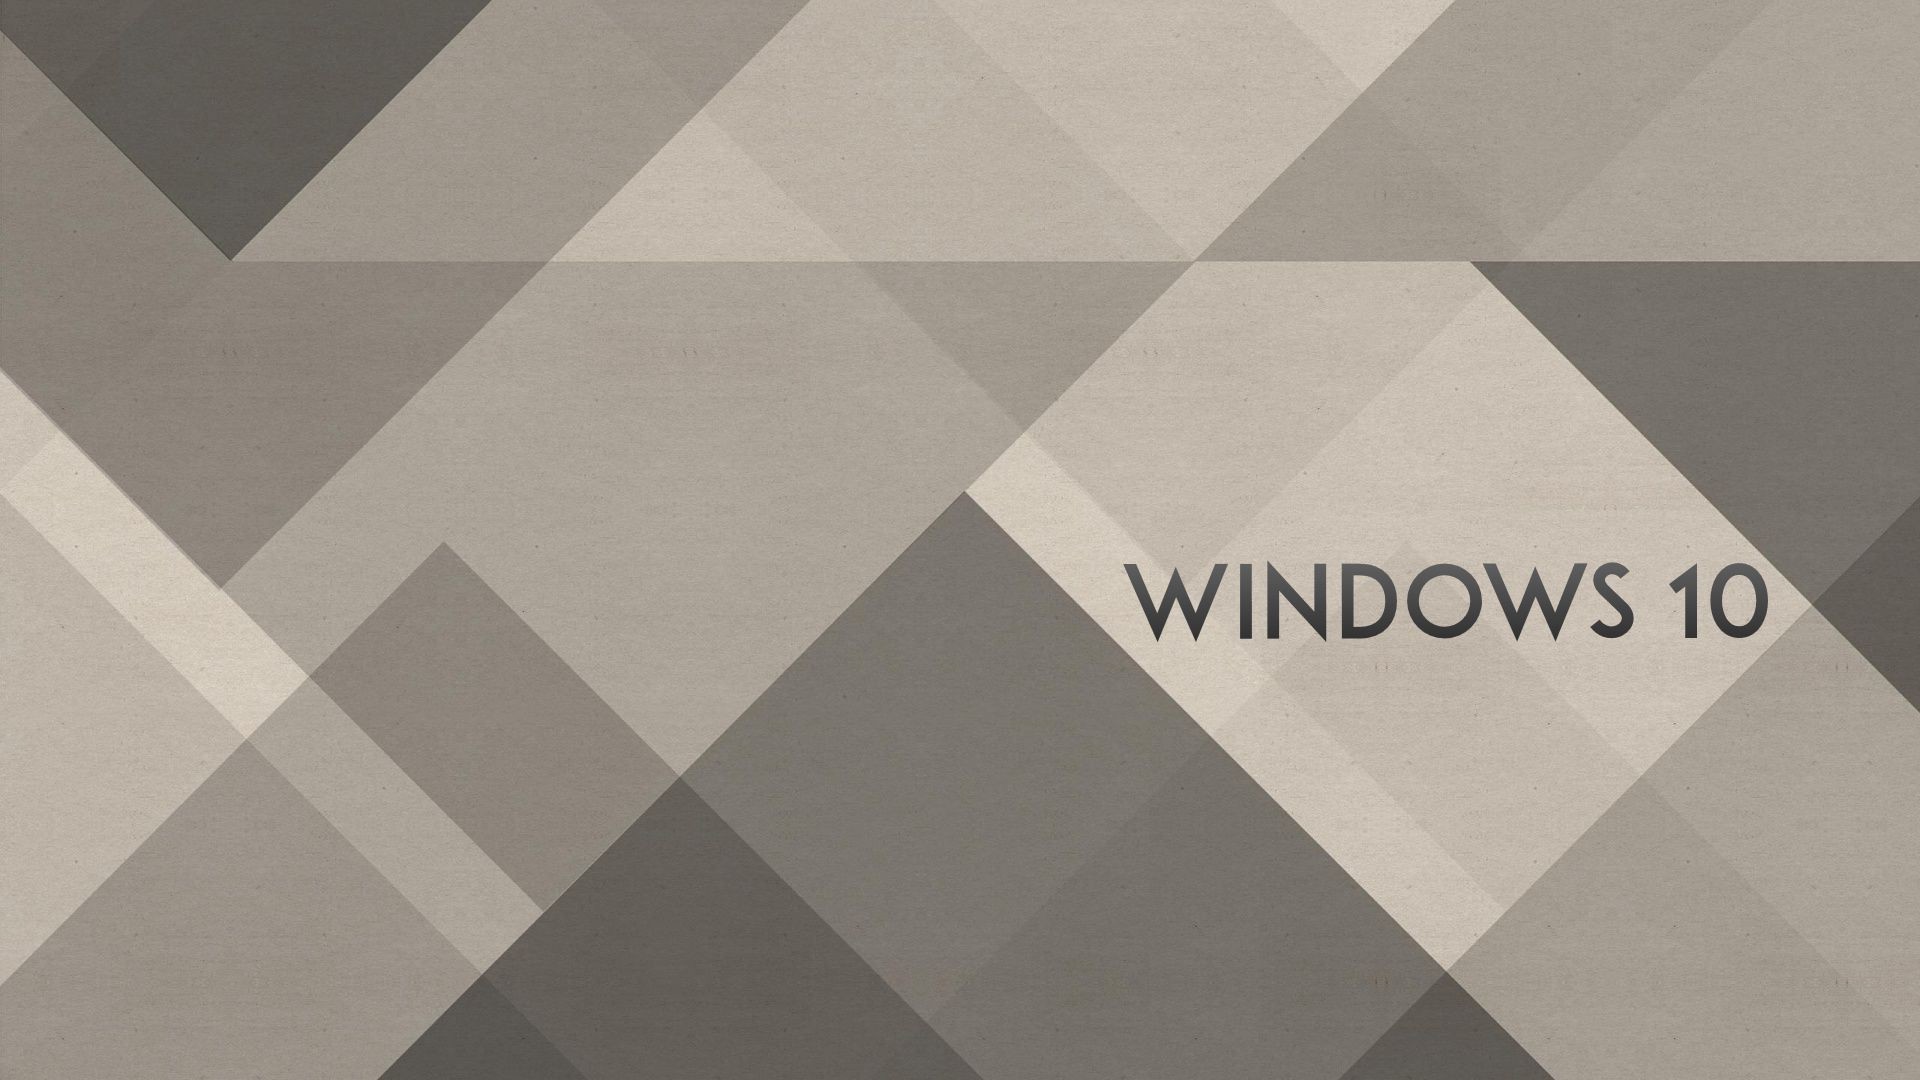 Windows 10 Wallpaper 1080p Full HD Grey Abstract